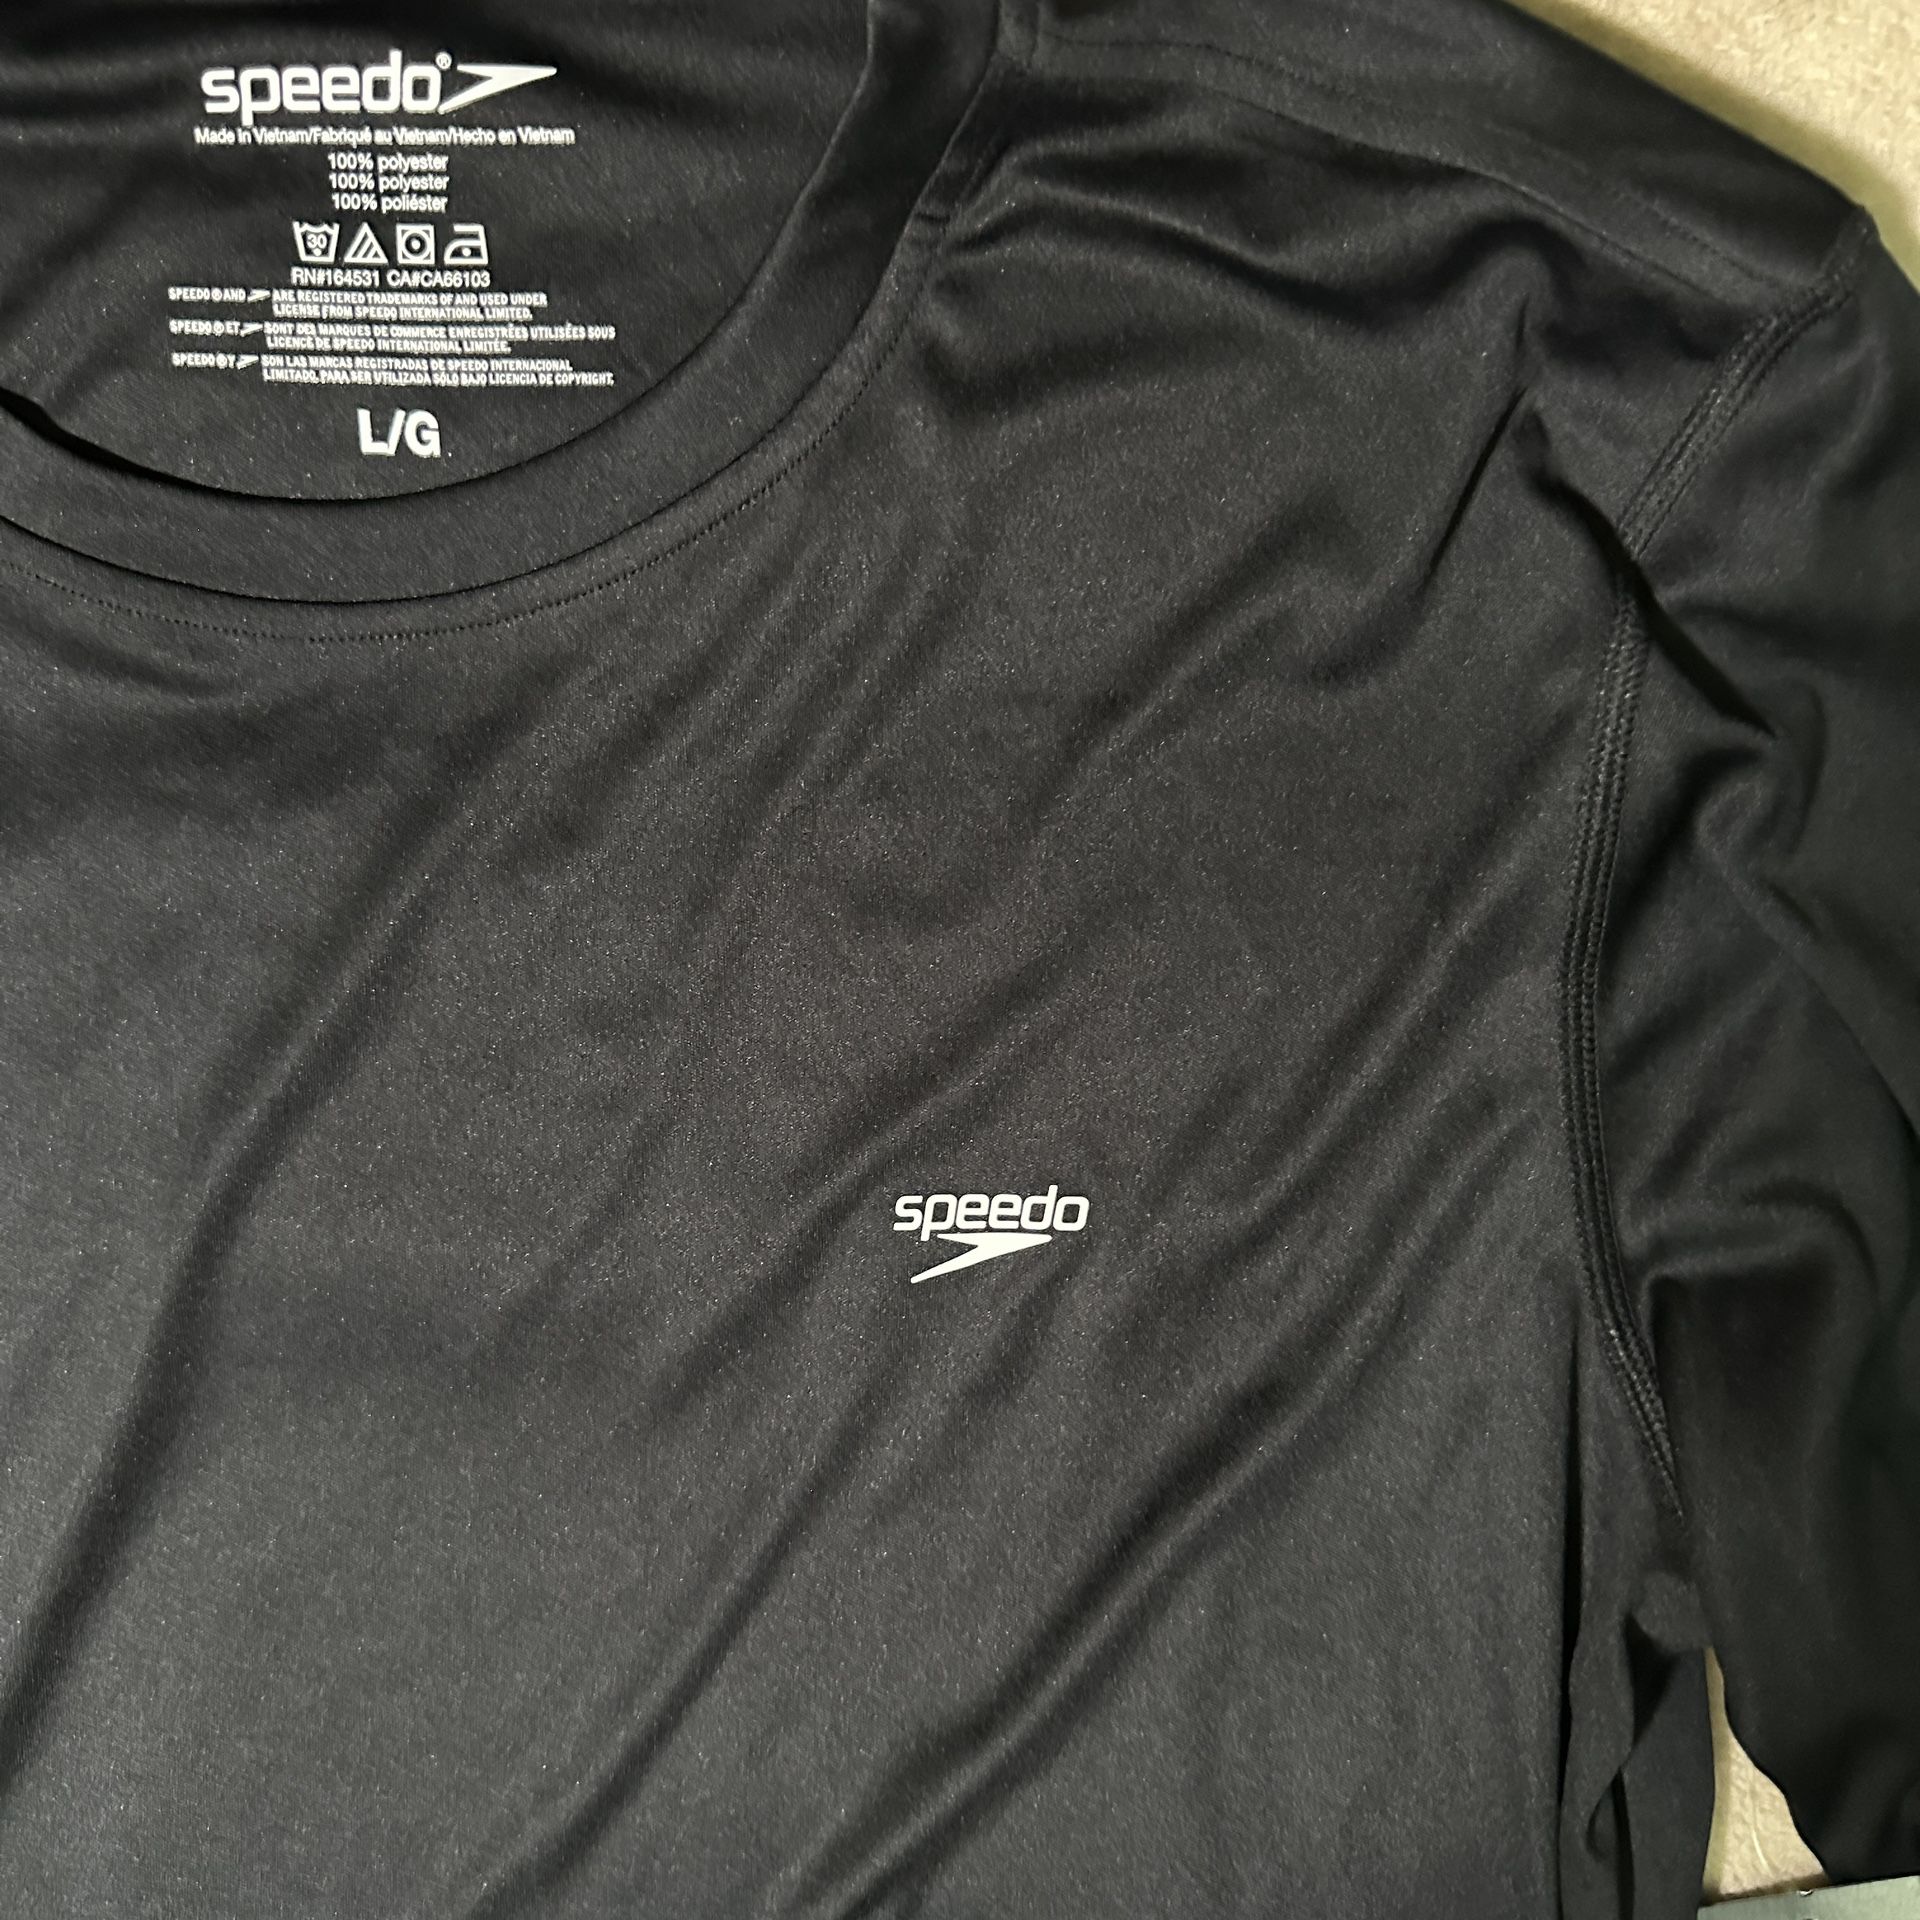 Speedo Men's Swim long Sleeve shirt Size L black